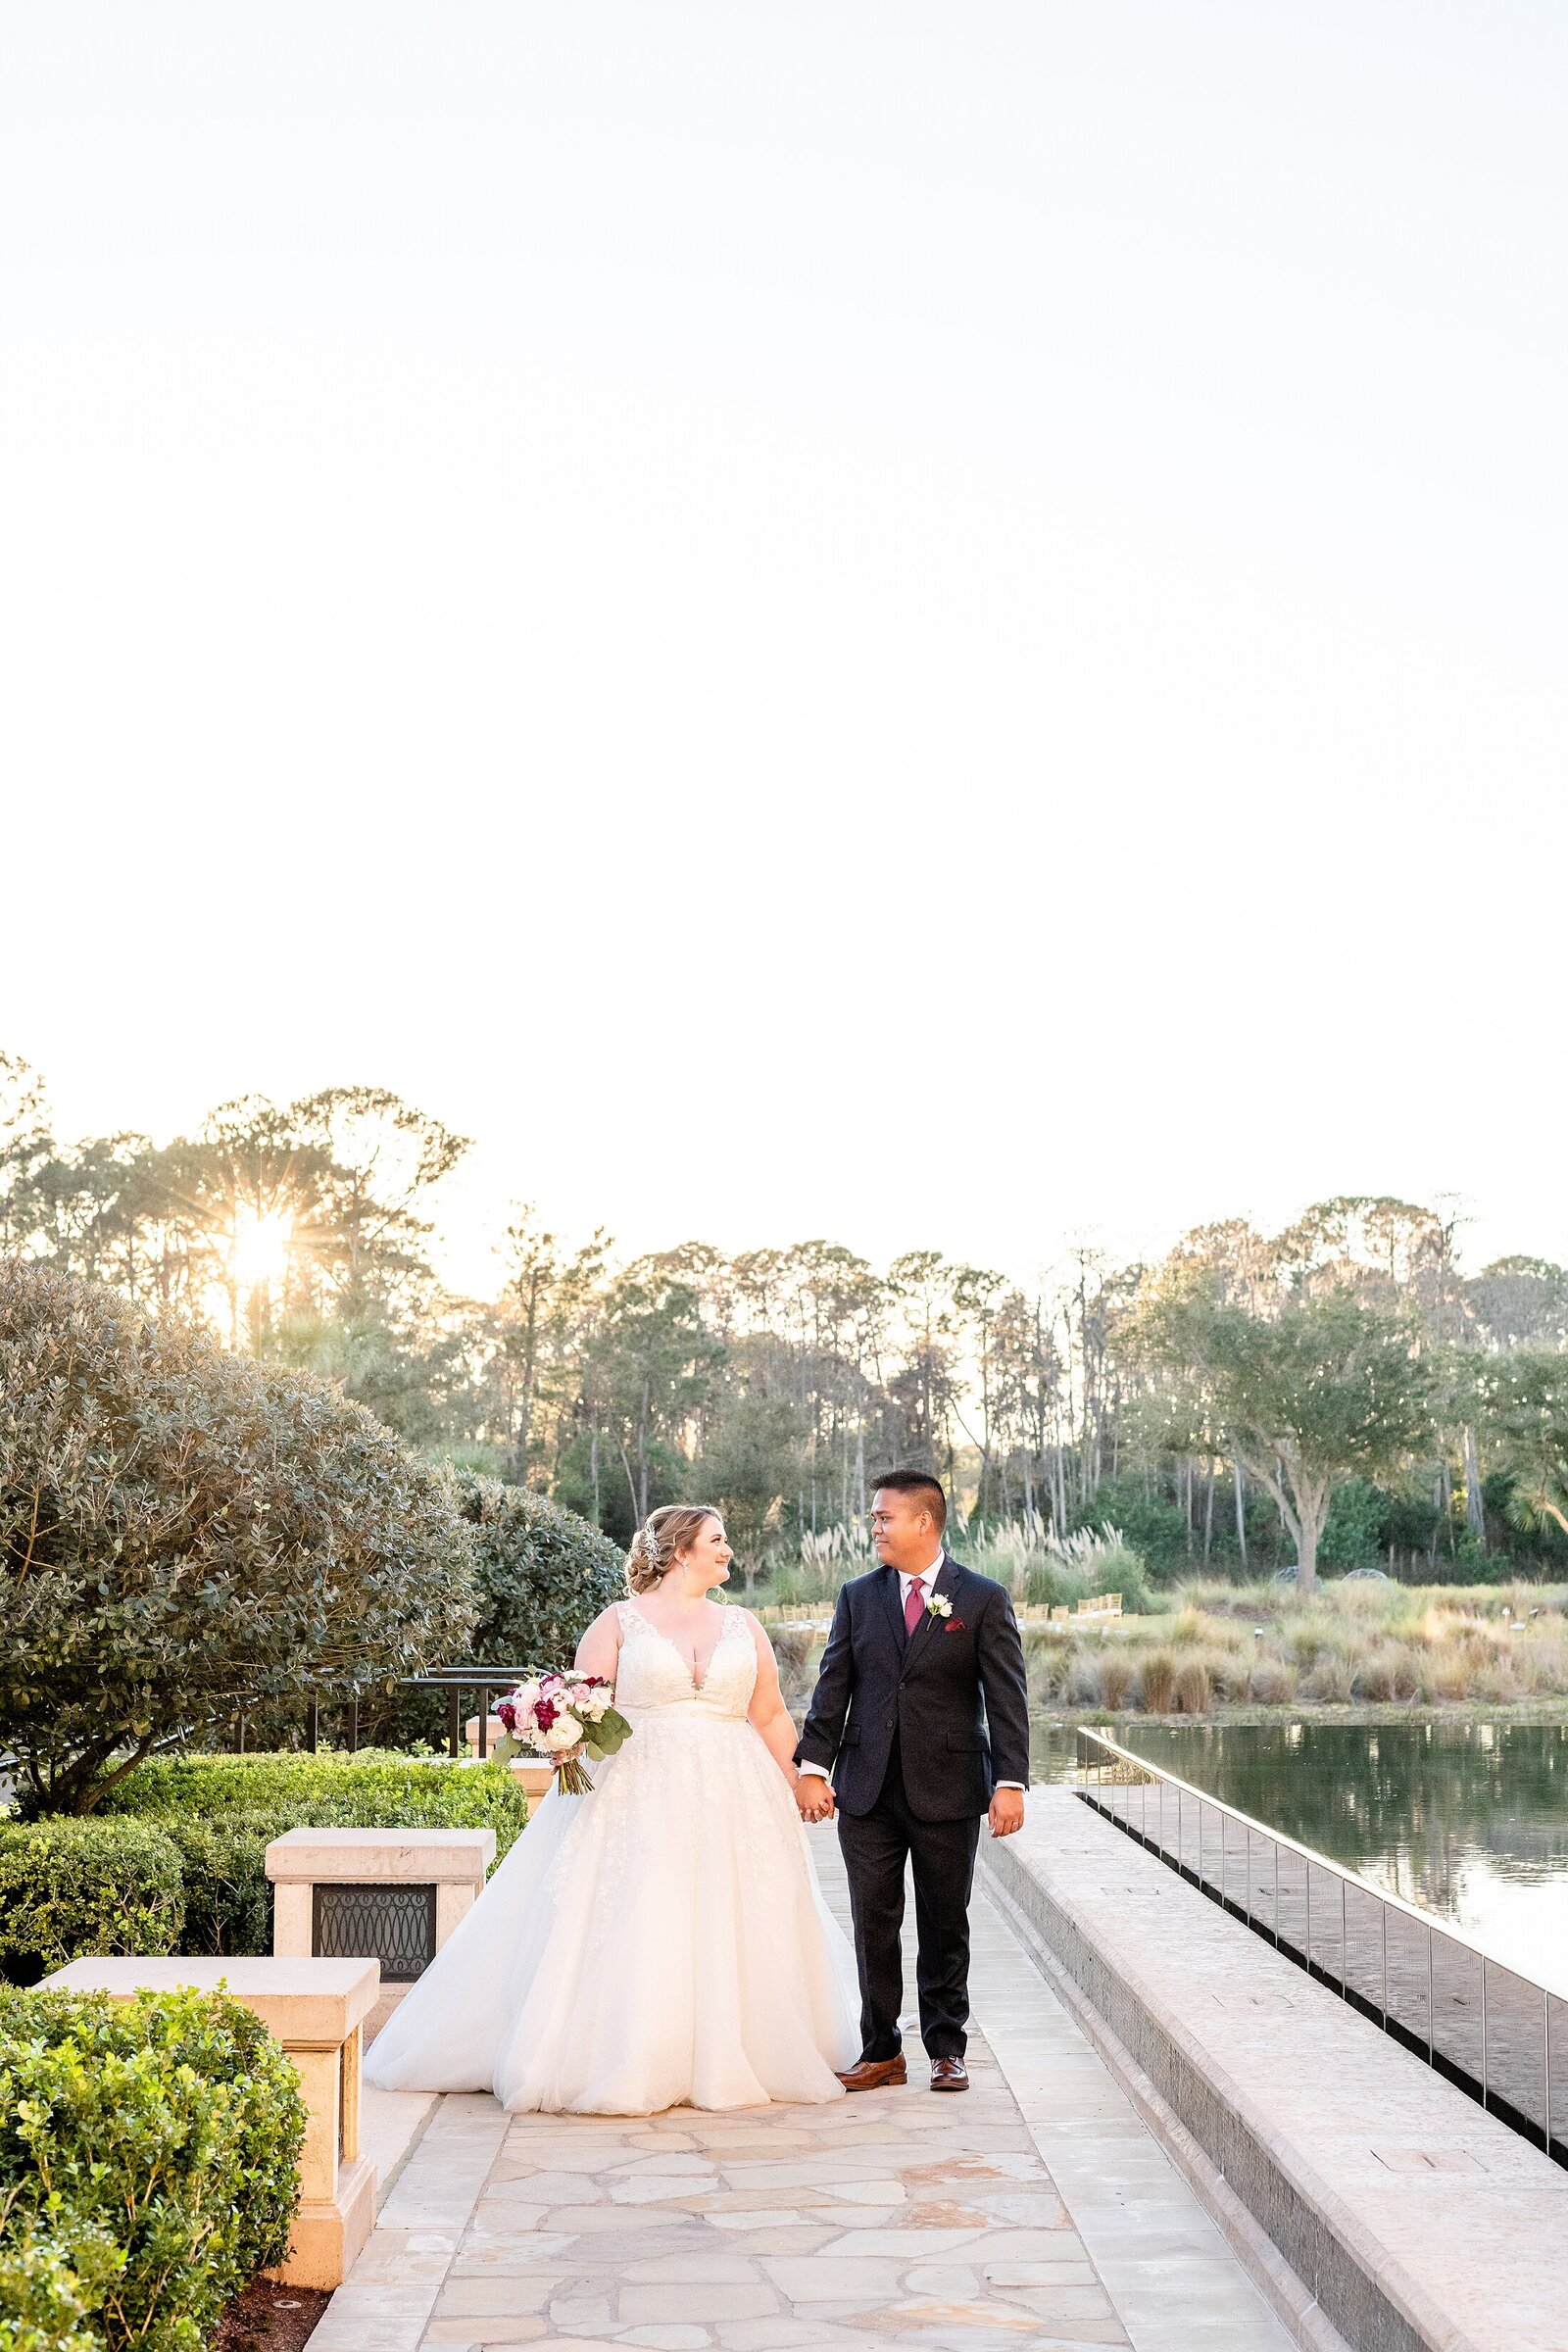 Sunset portraits on wedding day | Four Seasons Wedding | Orlando Wedding Photographer